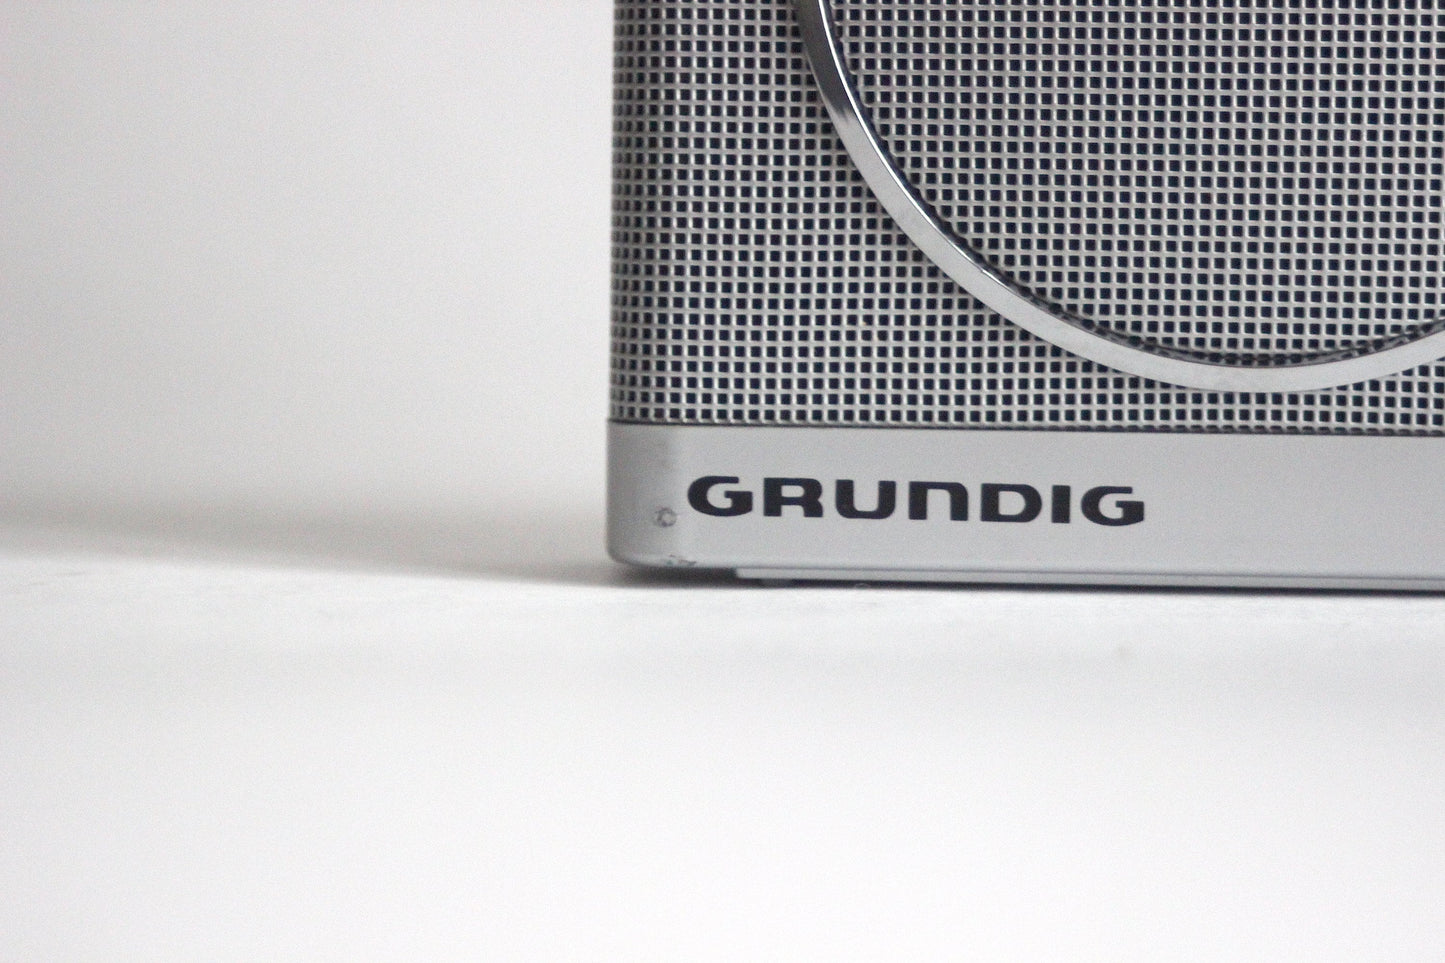 GRUNDIG Music Boy 60 portable radio. Germany 1983.